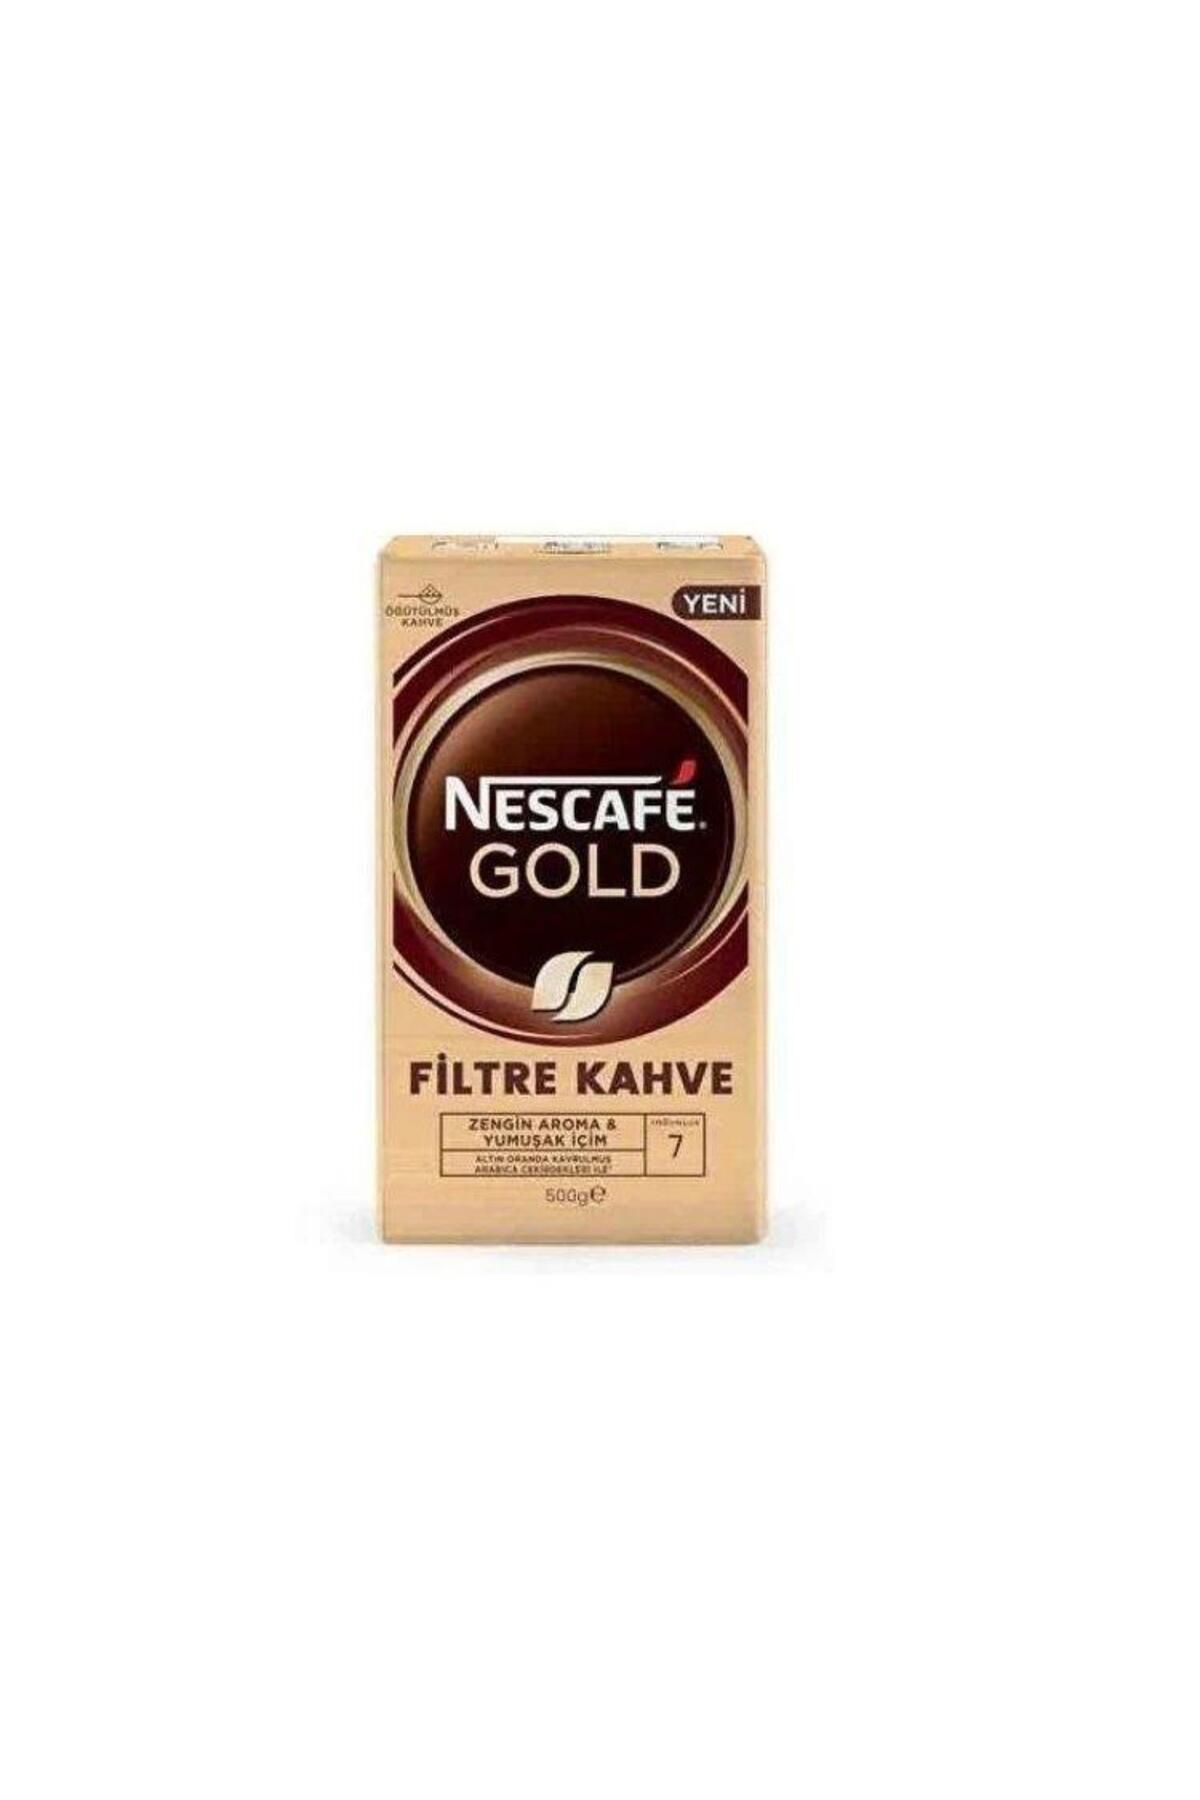 Nescafe Gold Filtre Kahve 500 Gr. (12'Lİ)